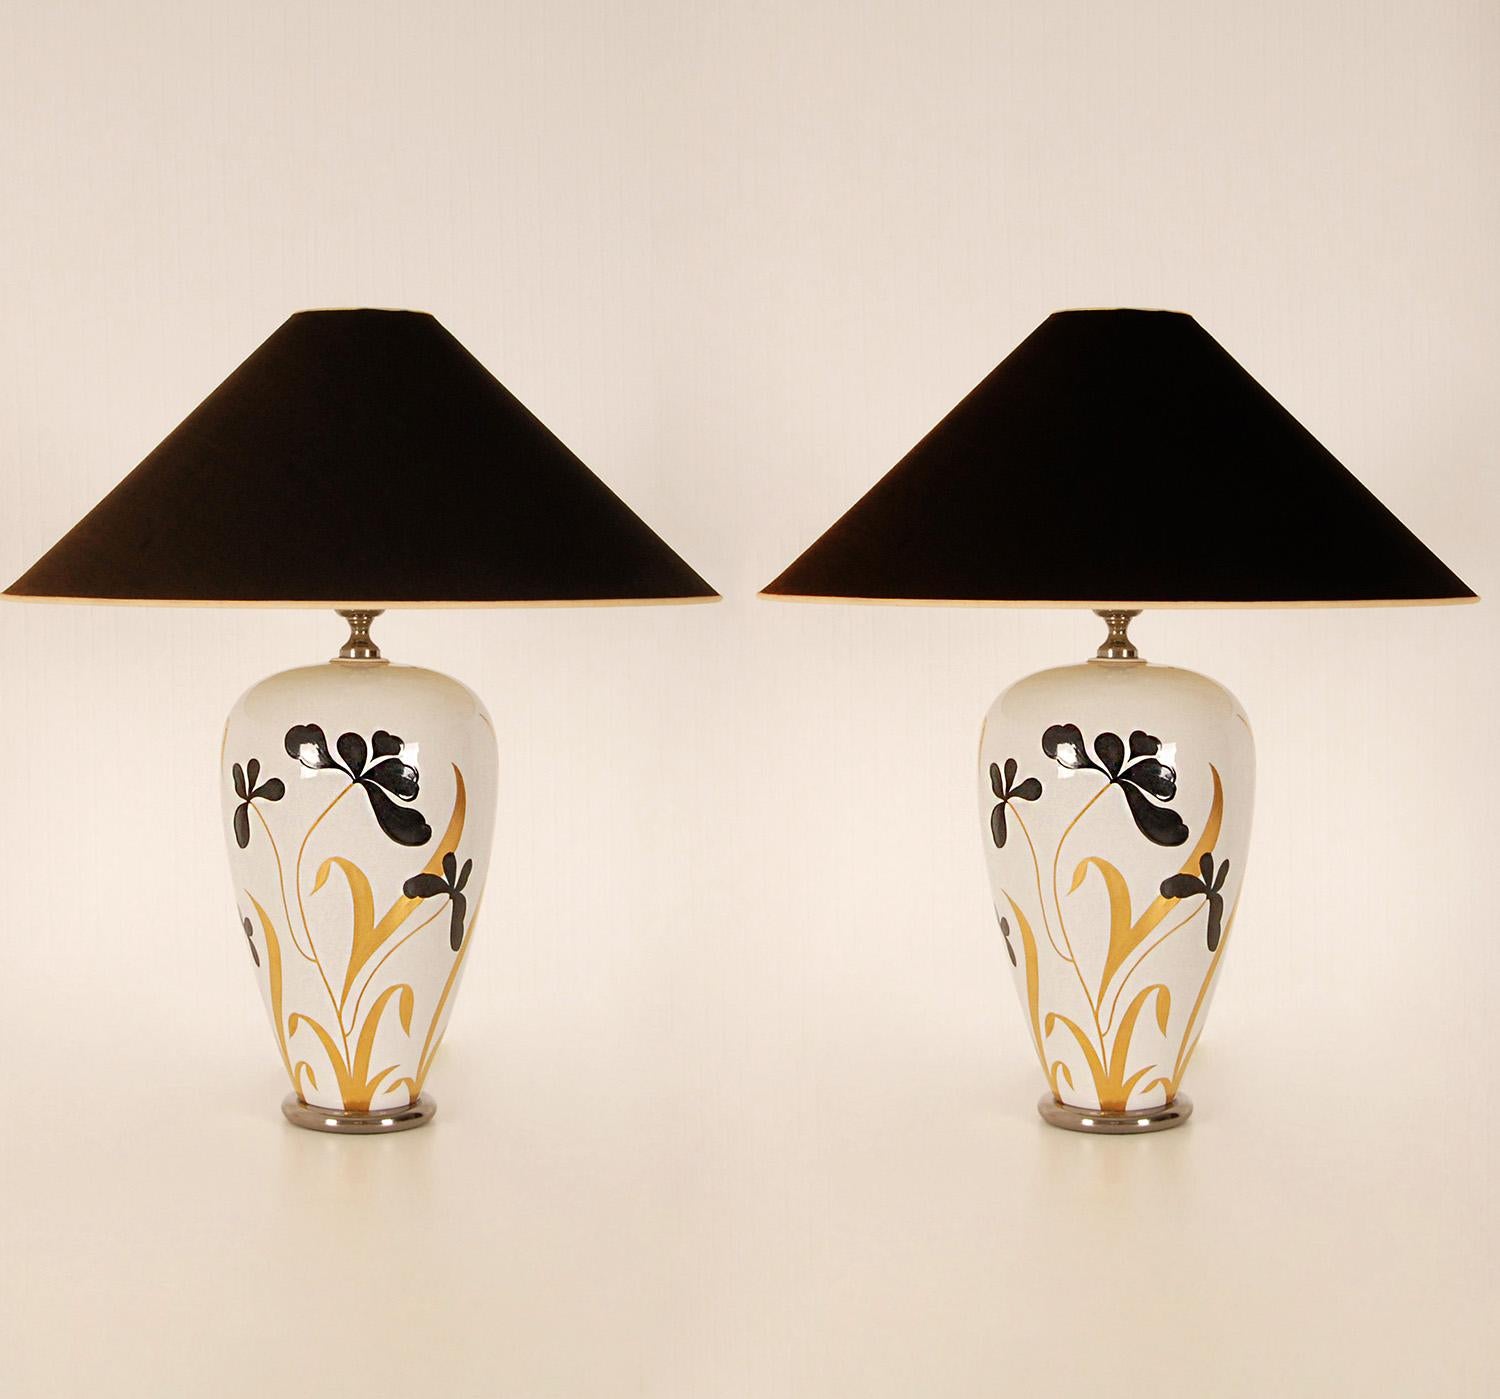 Vintage 1970s Italian Ceramic Vase Lamps Gold Black White Porcelain, a Pair For Sale 6